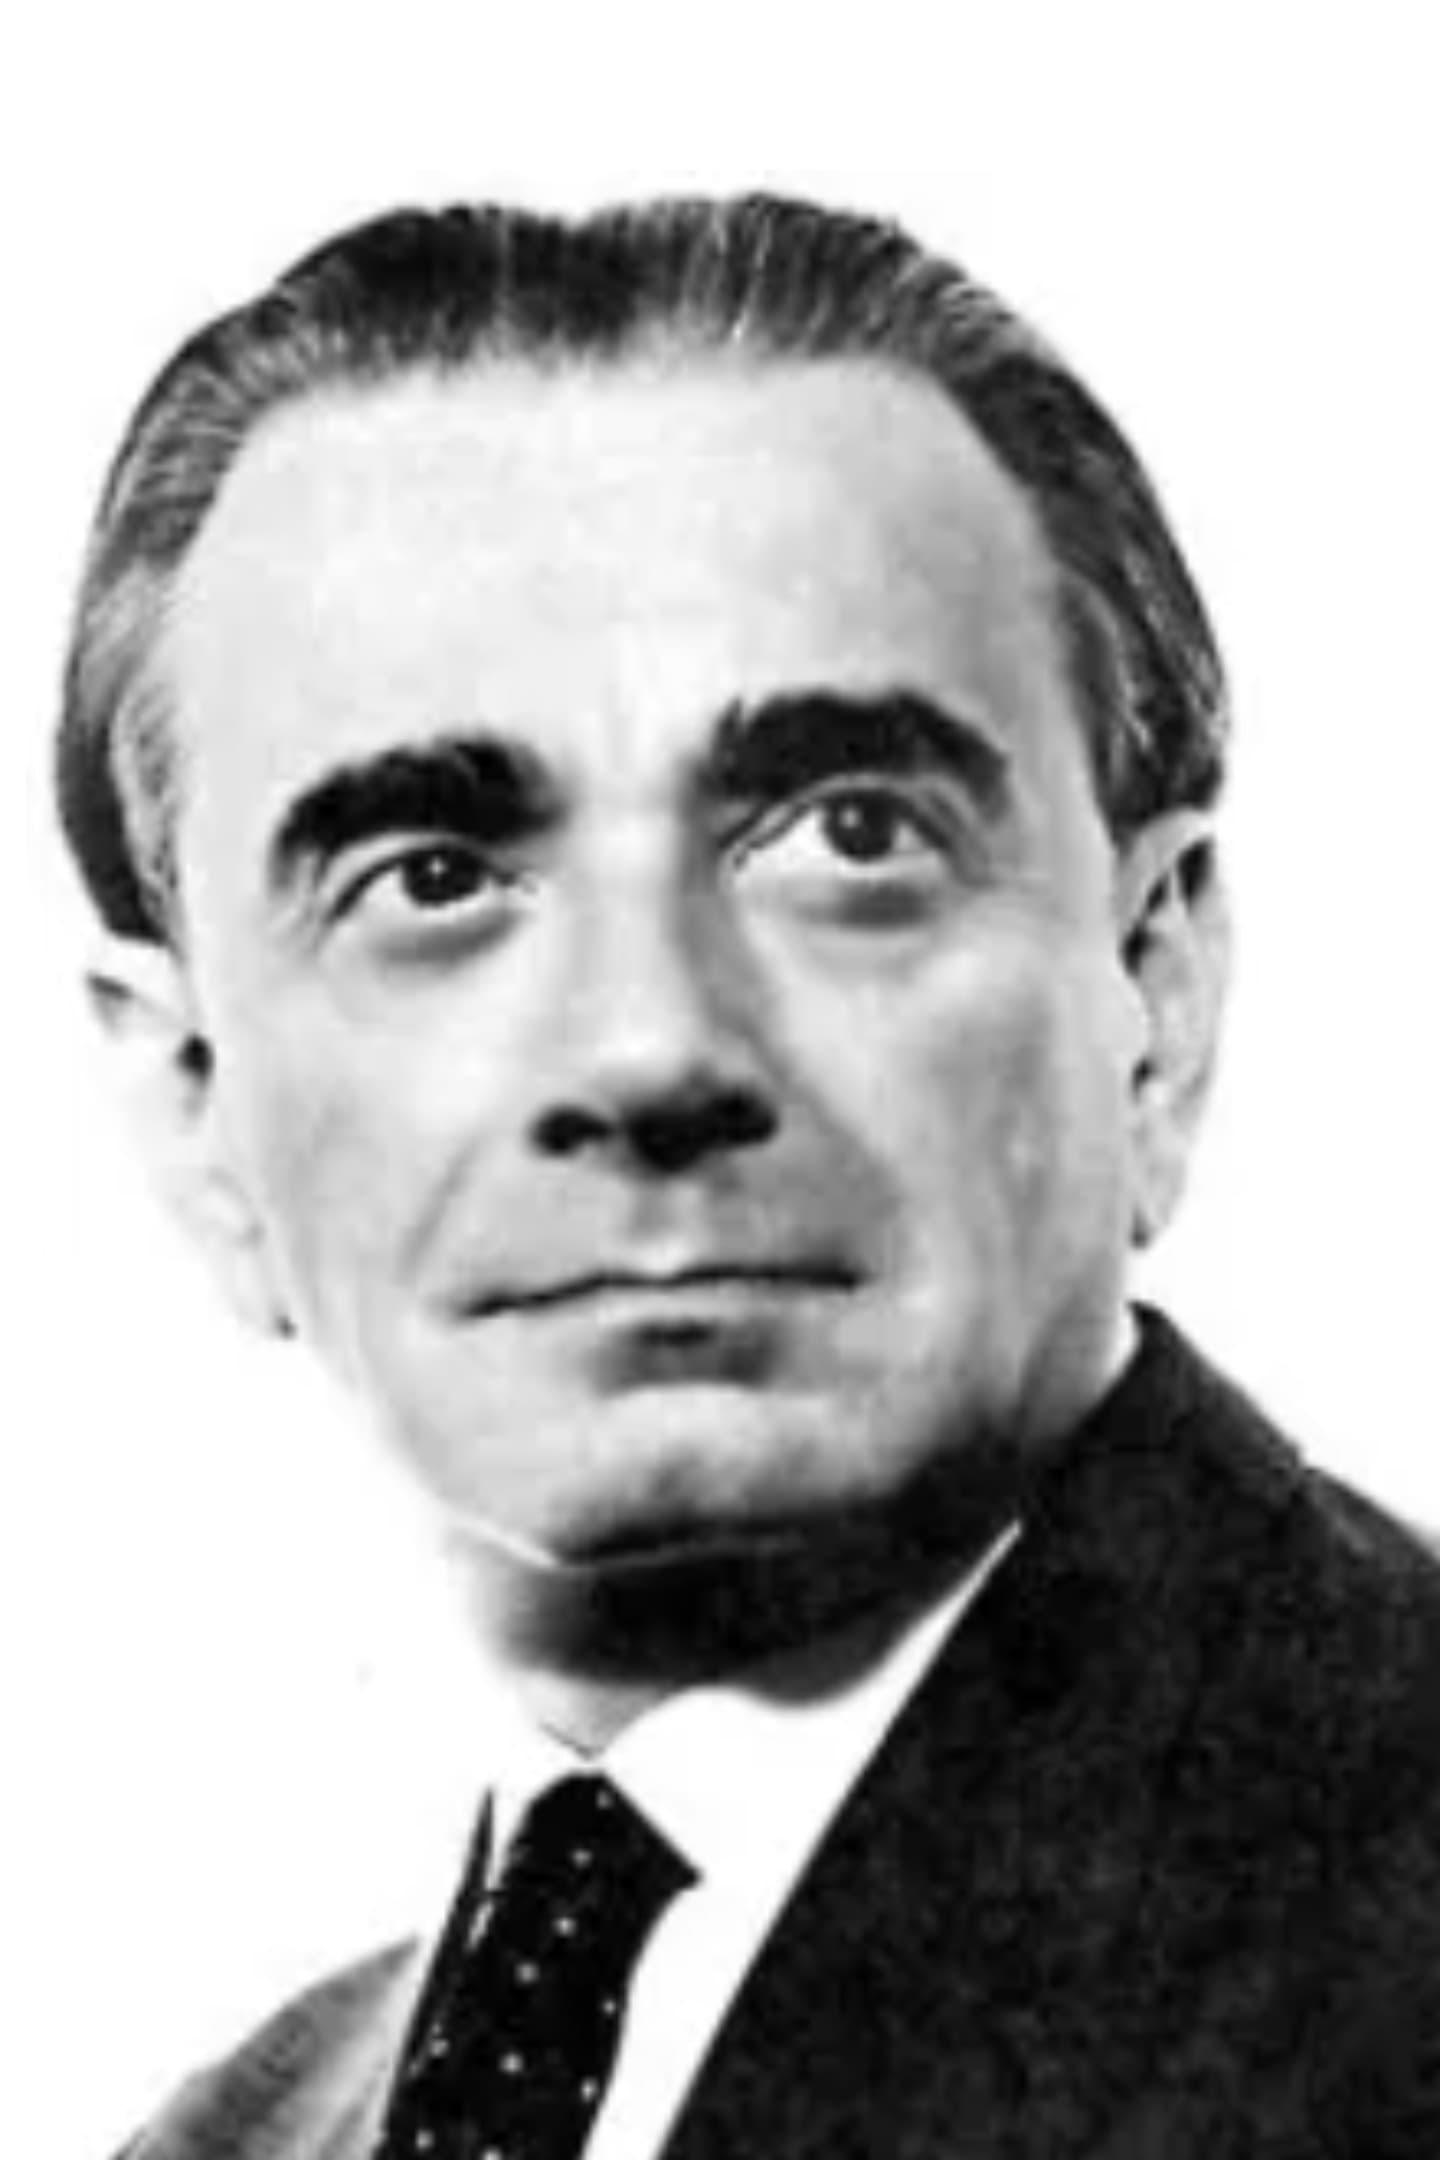 Miklós Rózsa | Original Music Composer